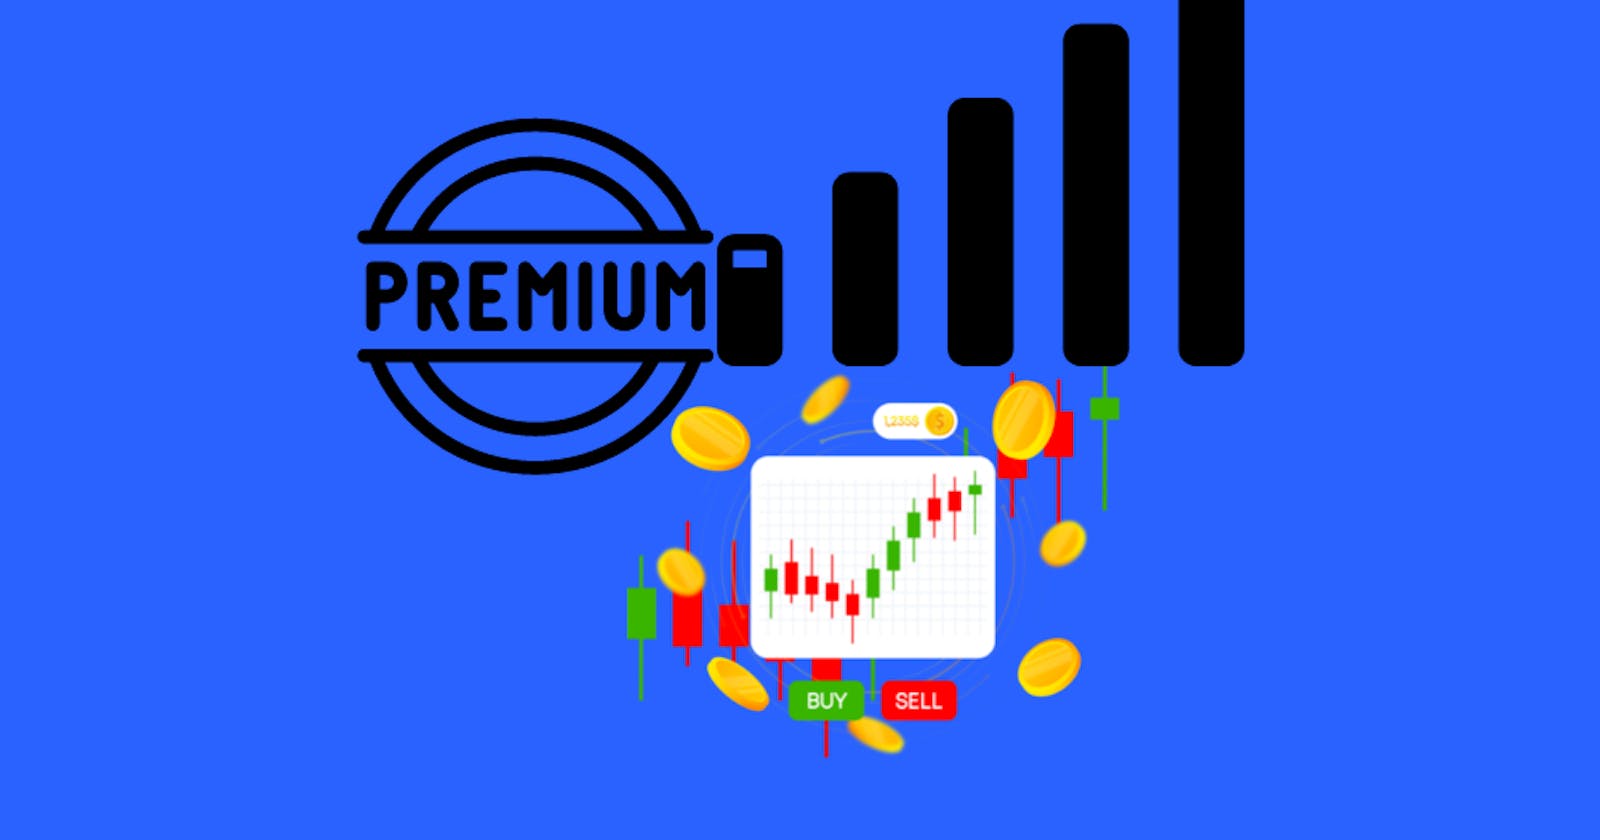 Best premium signals free for crypto trading